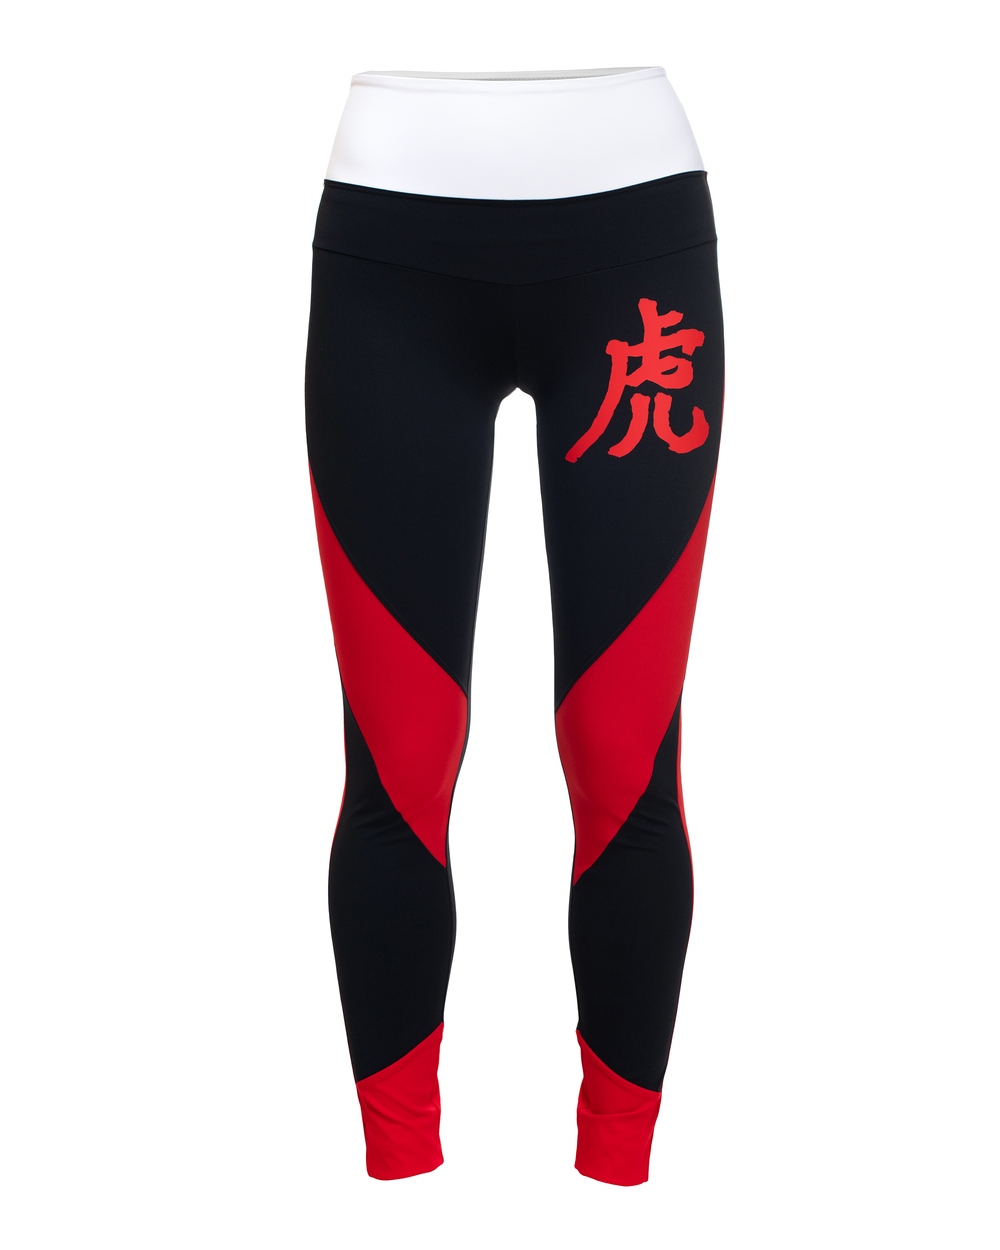 Black Sports Leggings - Embroidered with Dene Academy logo